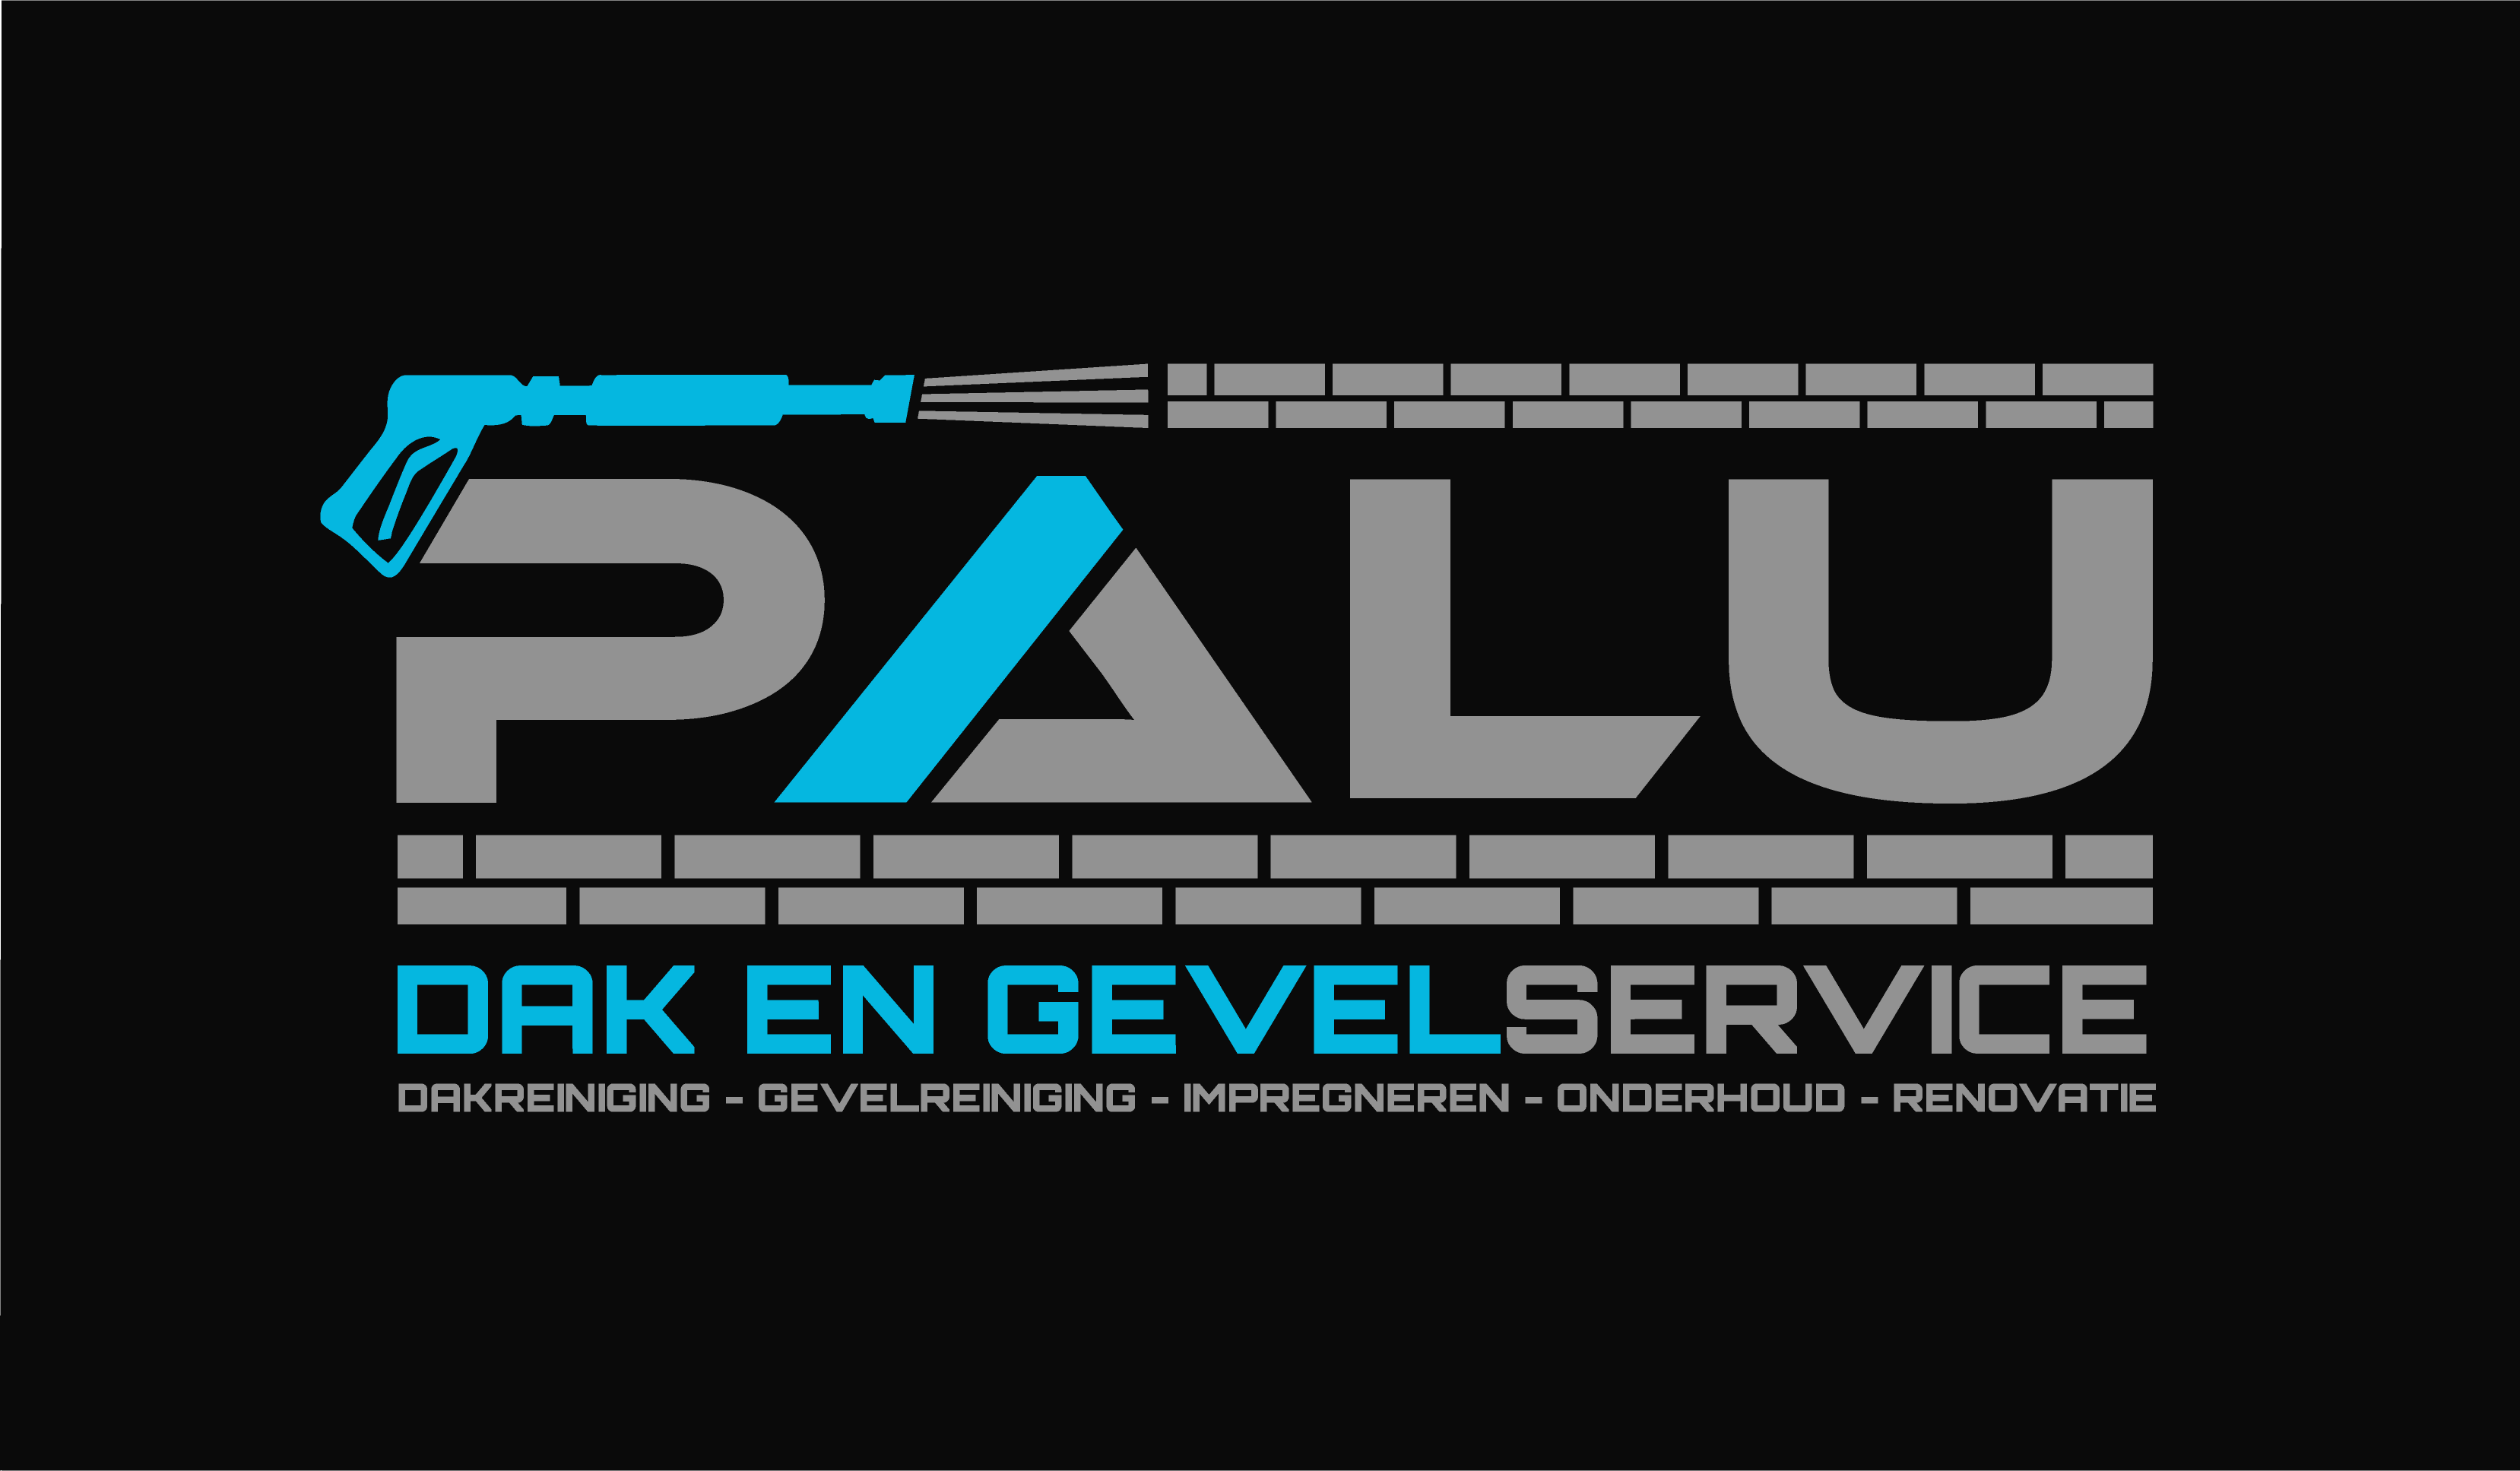 Palu dak en gevelservice logo